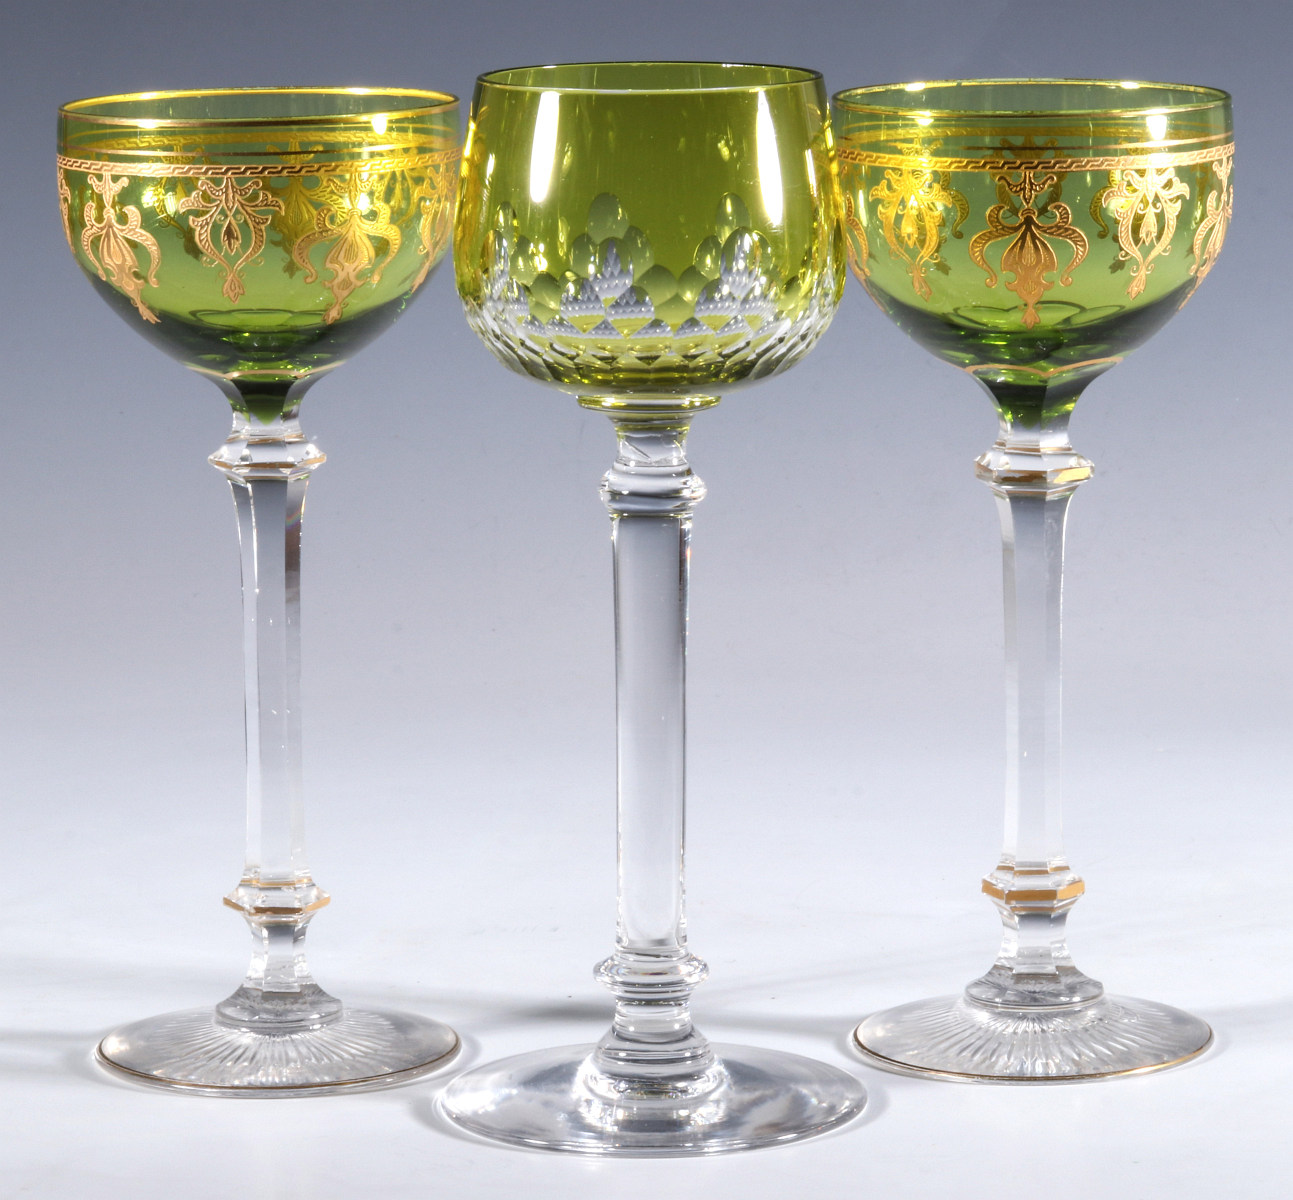 THREE CIRCA 1900 ART GLASS WINE GOBLETS